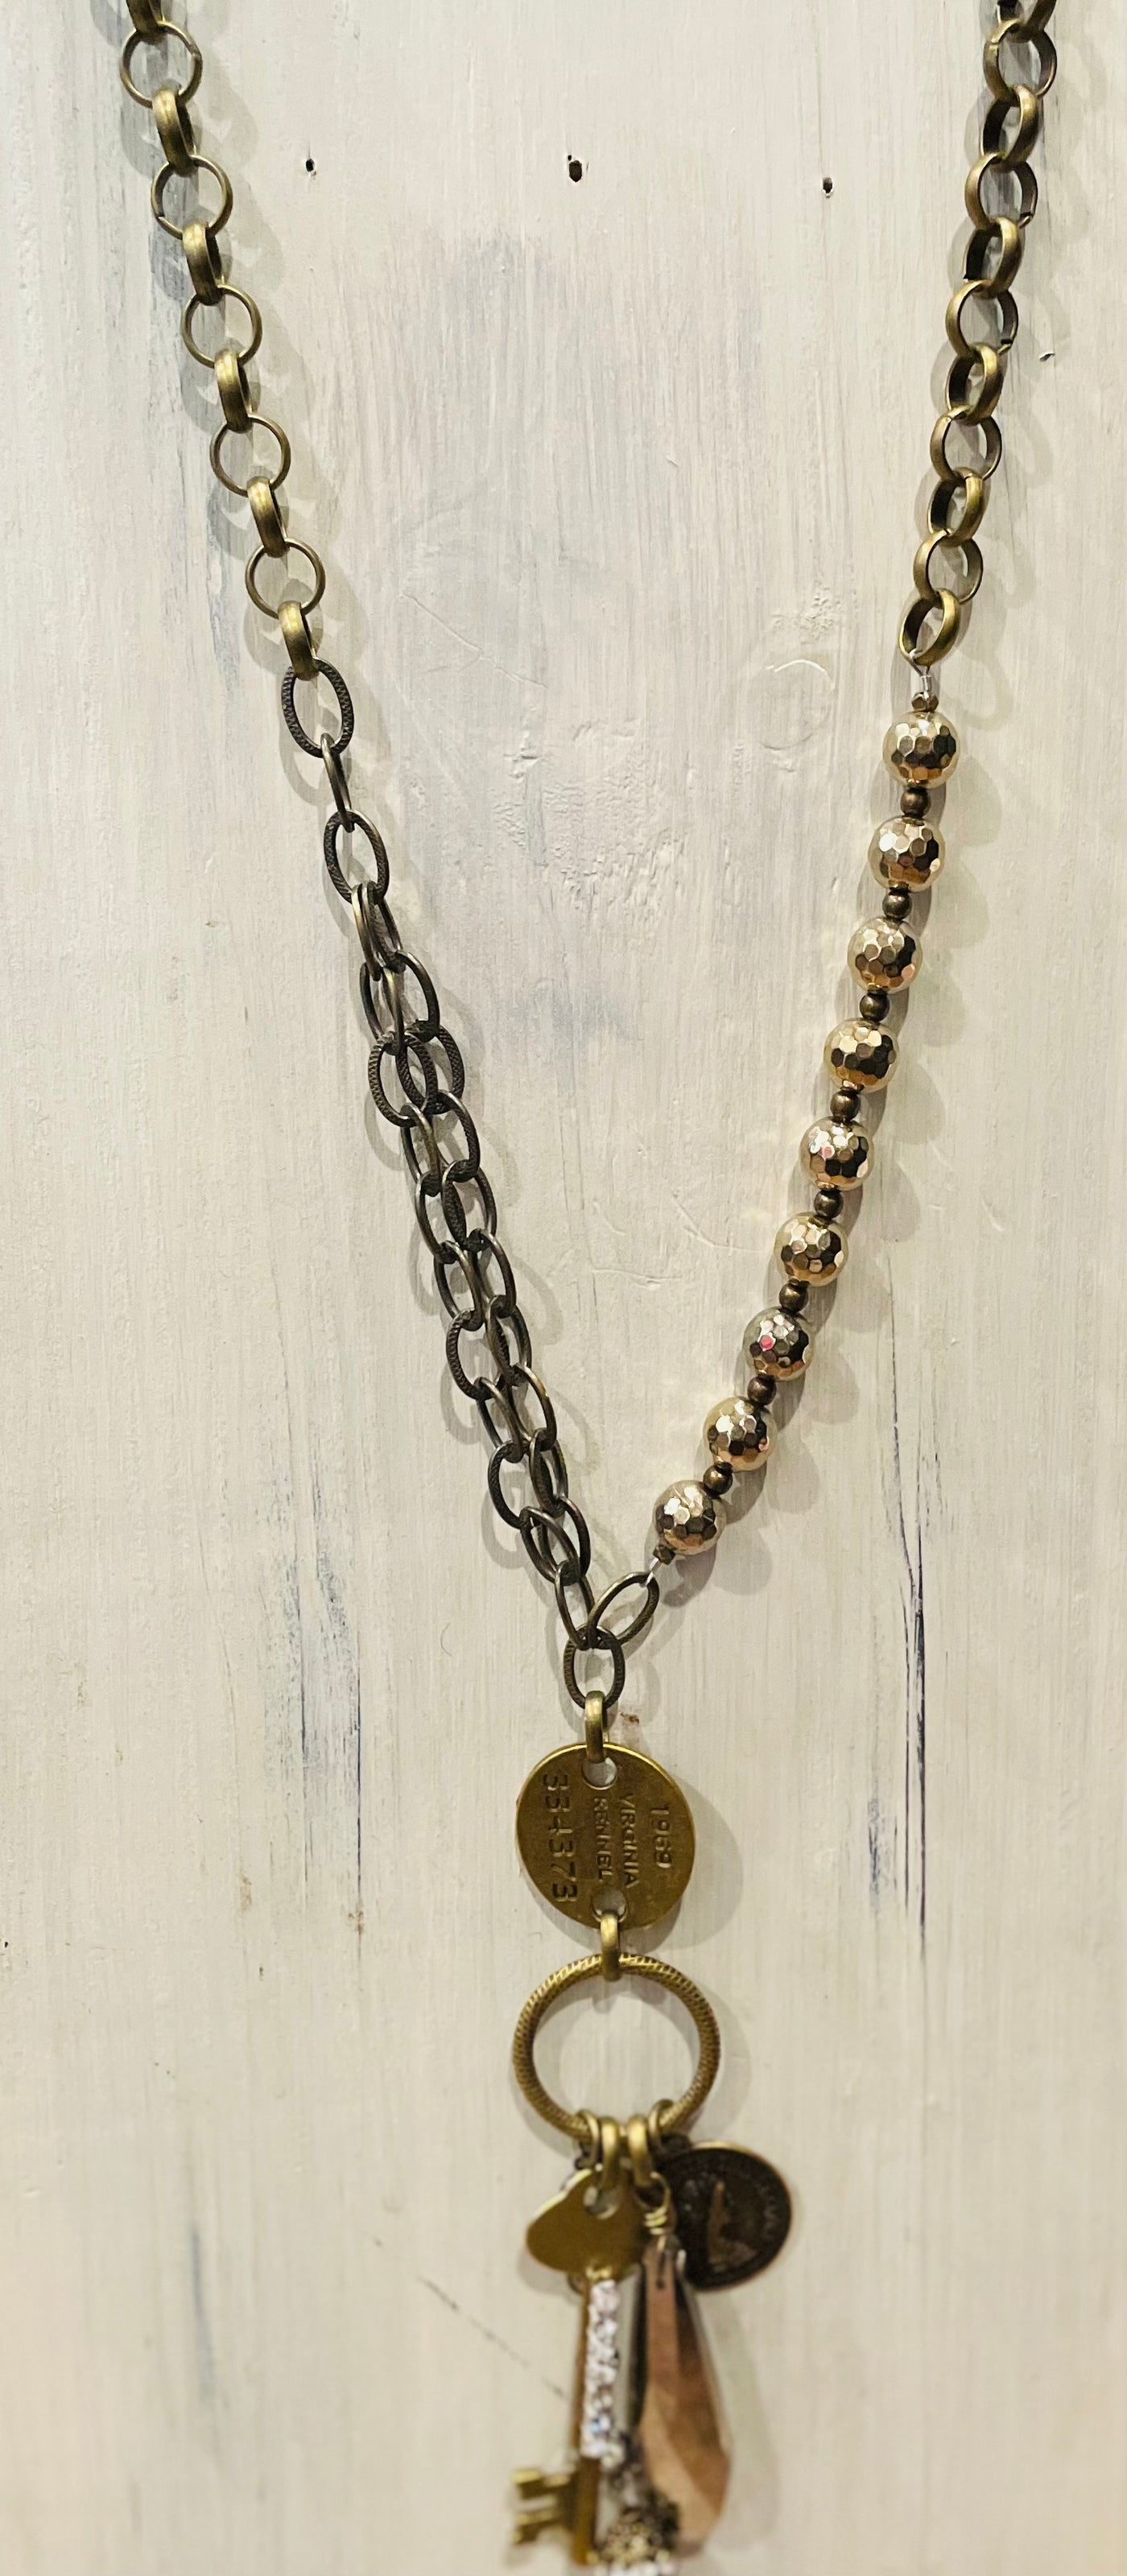 Scooples "Vintage Metallic Key" Necklace